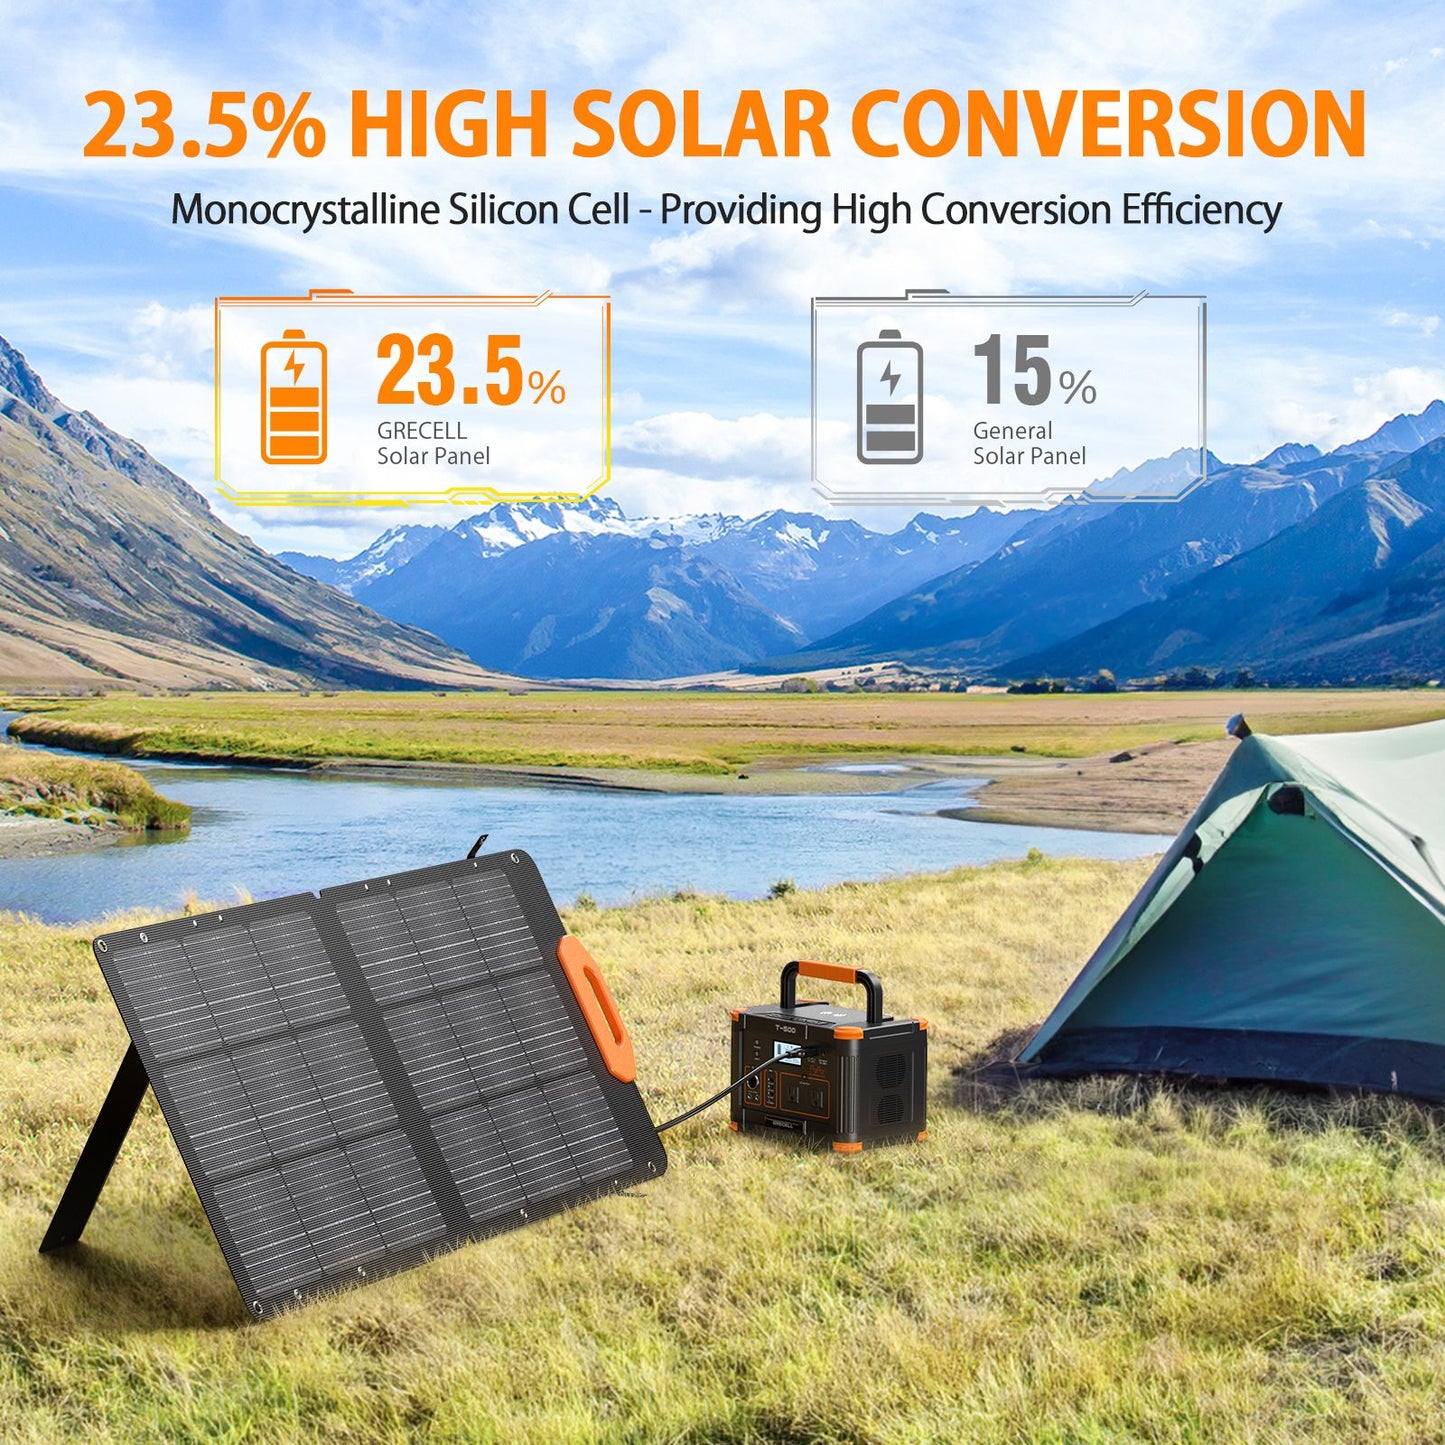 23.5% high solar conversion 